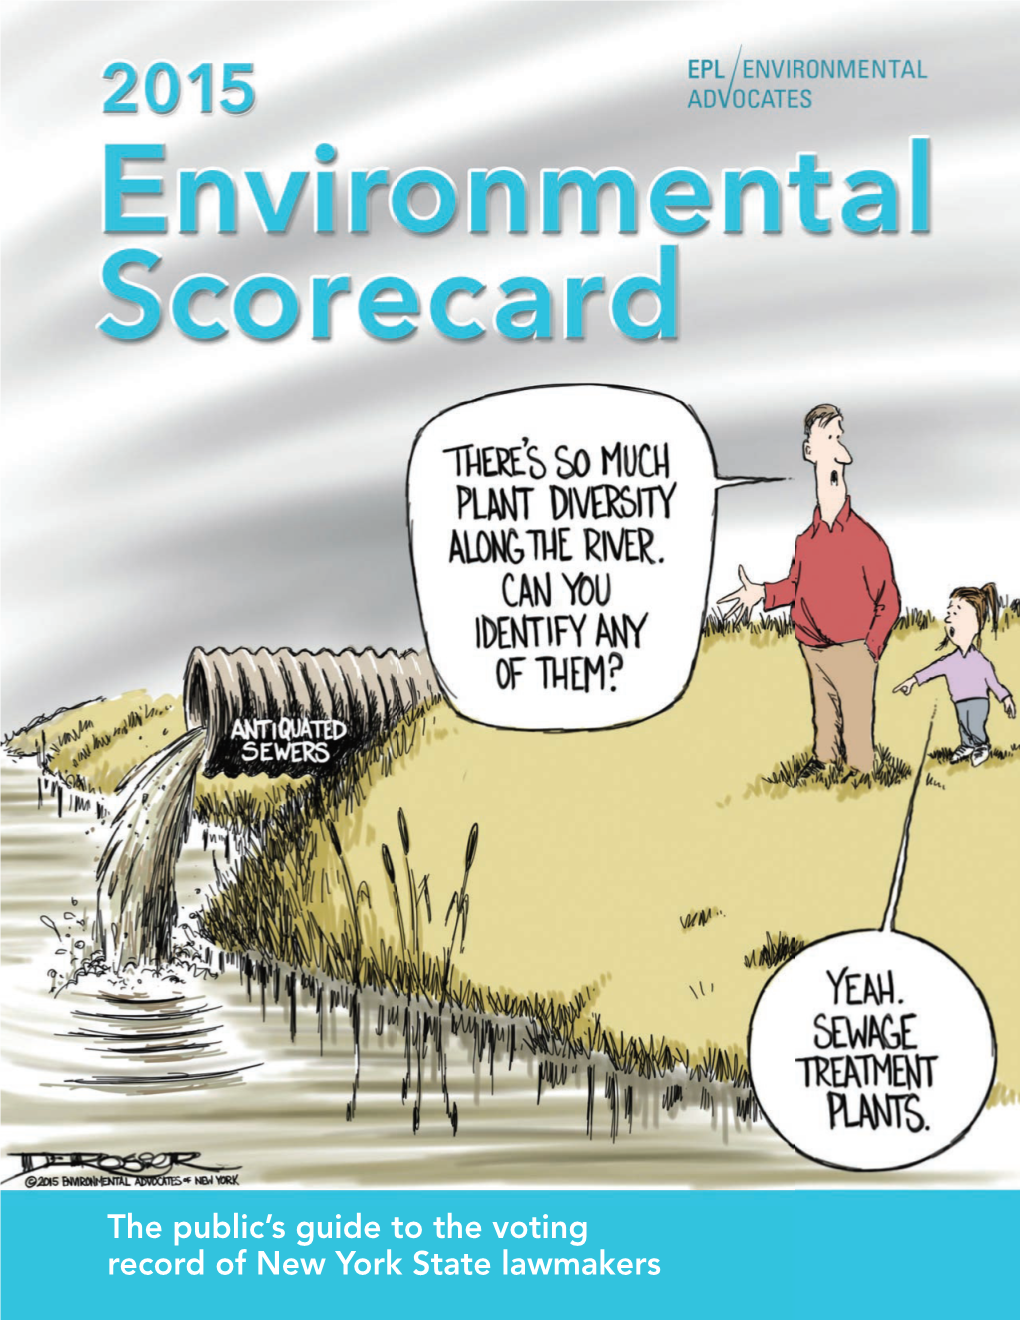 EPL/Environmental Advocates